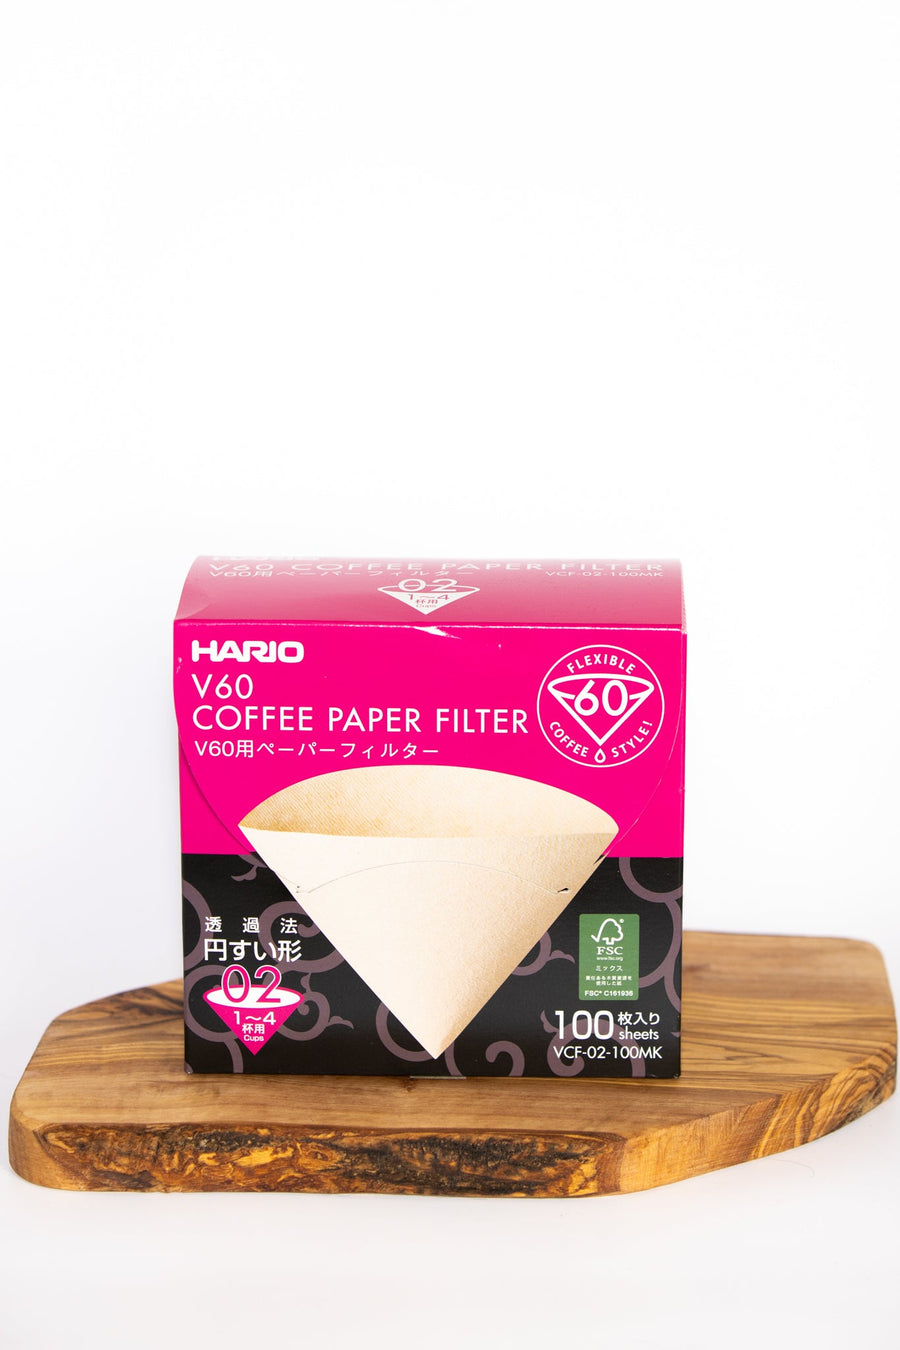 Hario V60 Paper Filters "Misarashi" (Natural) 100ct Box - Be Good Coffee Co.